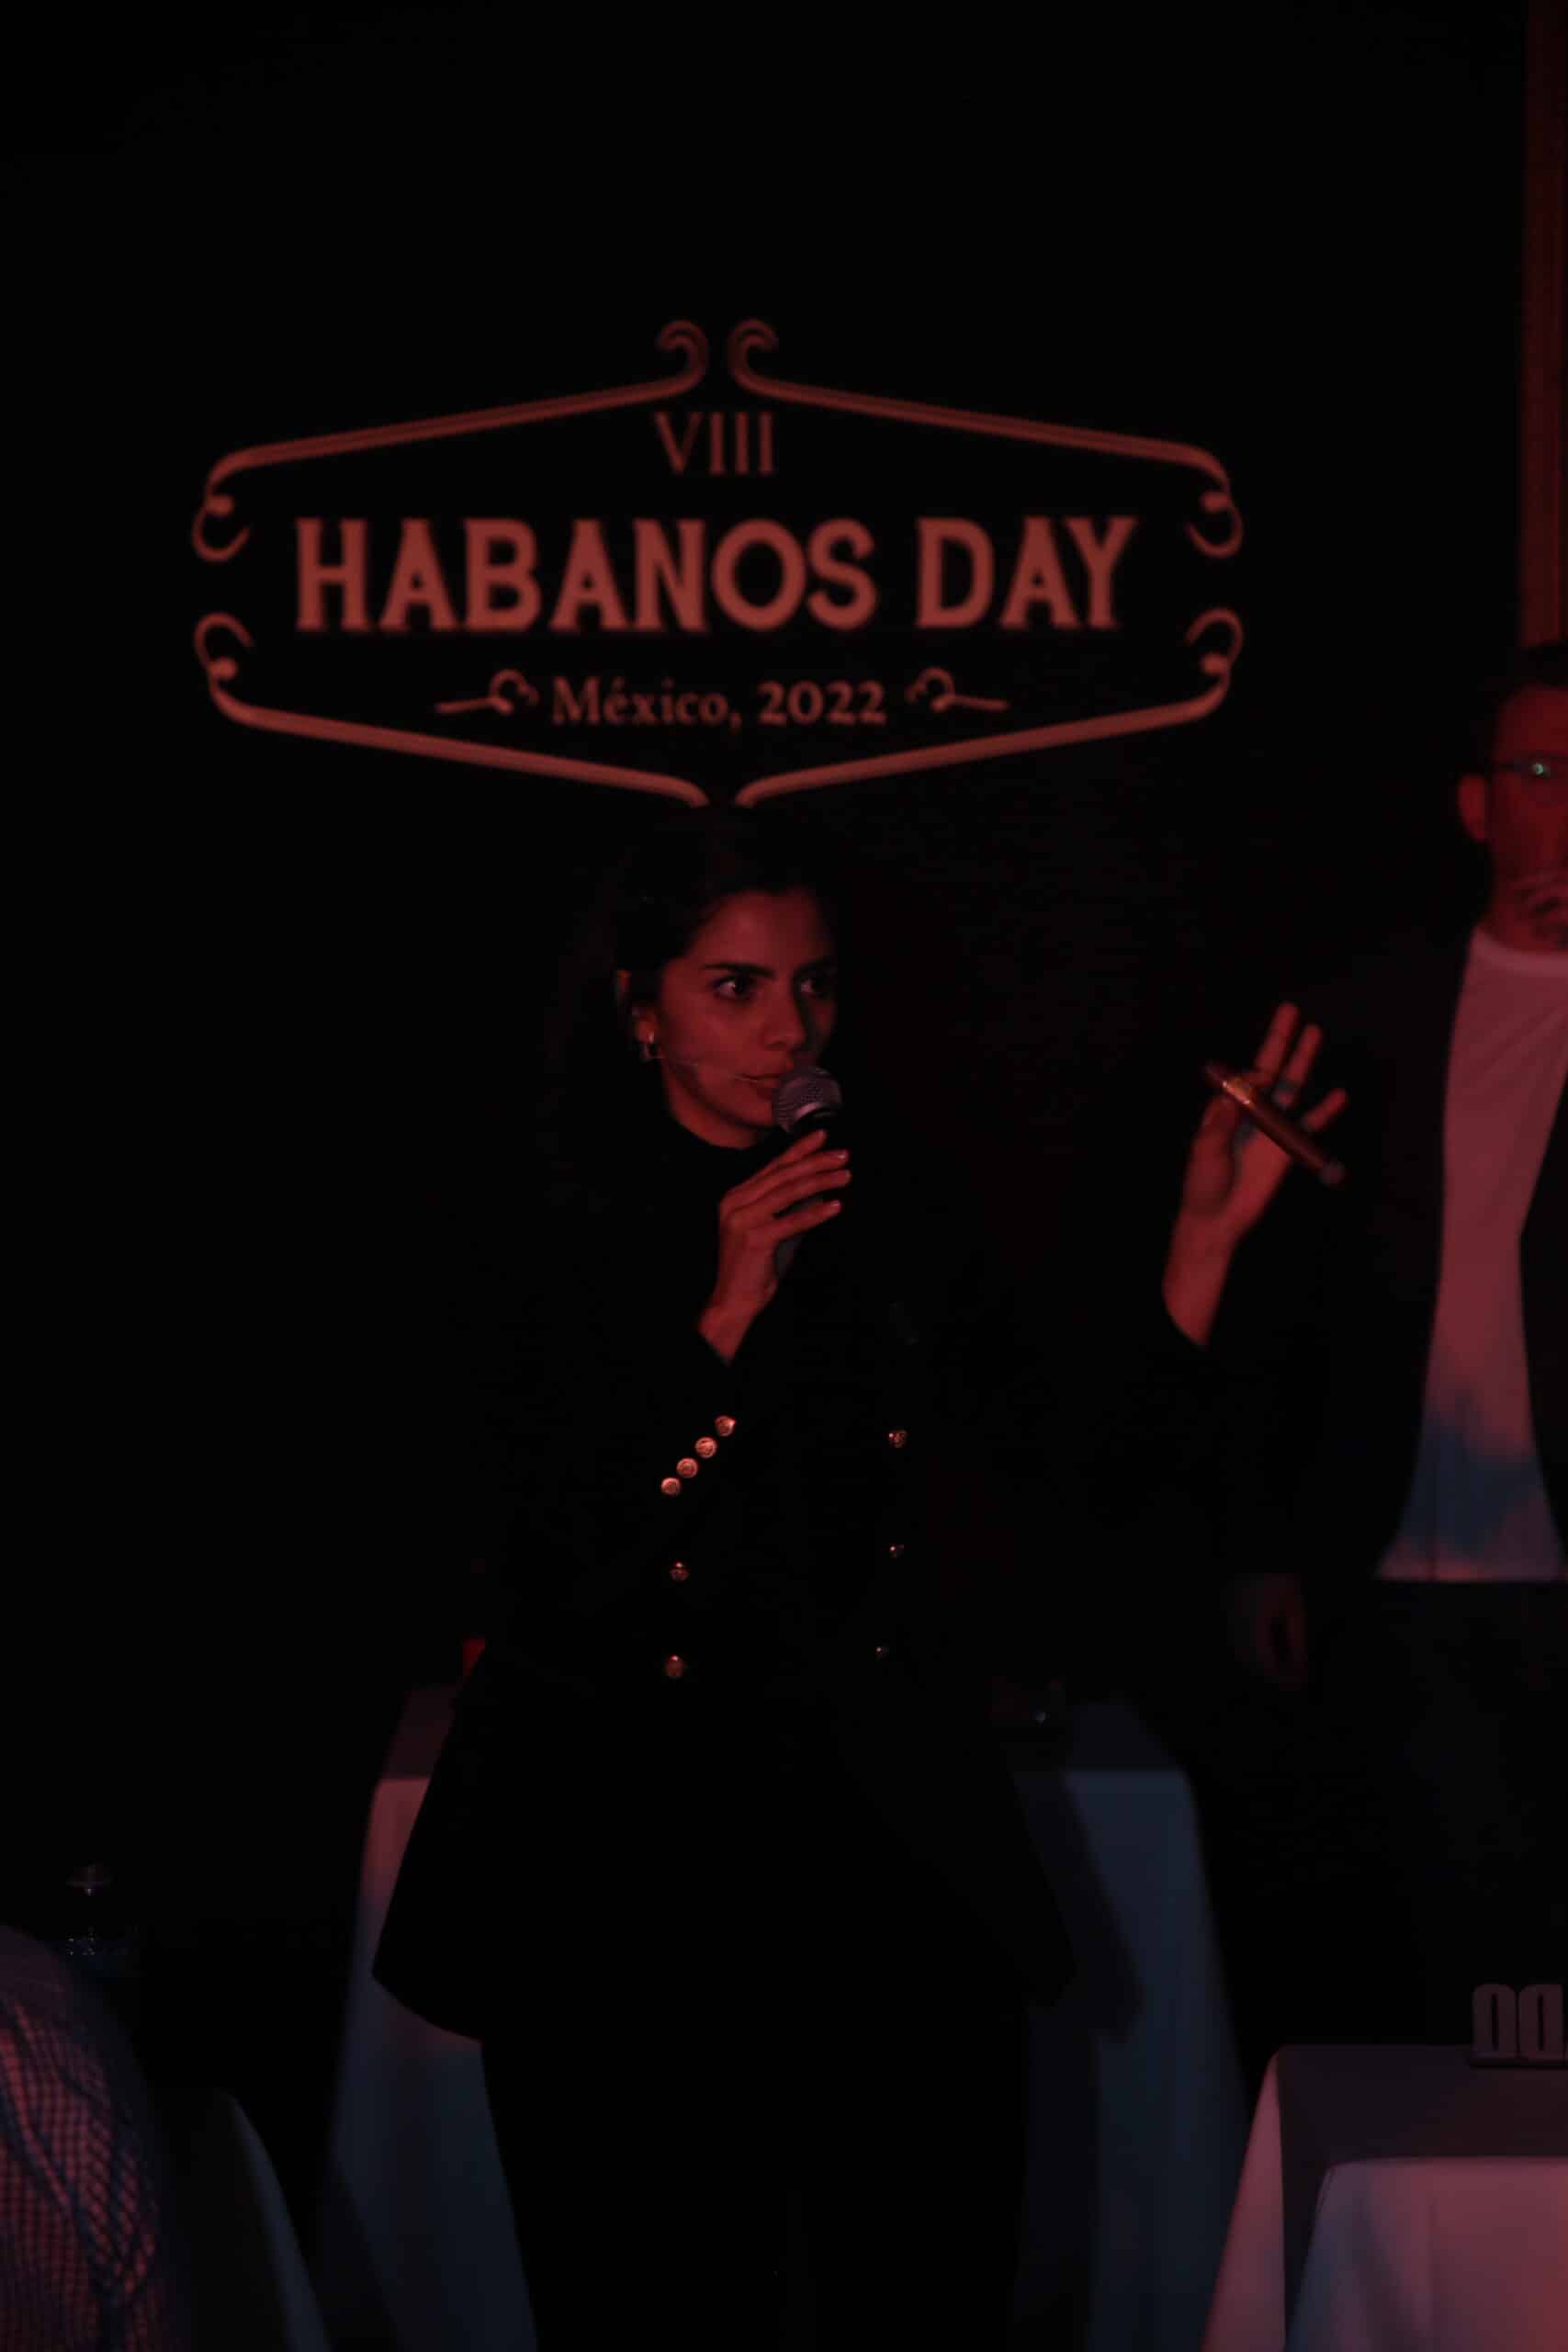 Habana's Day